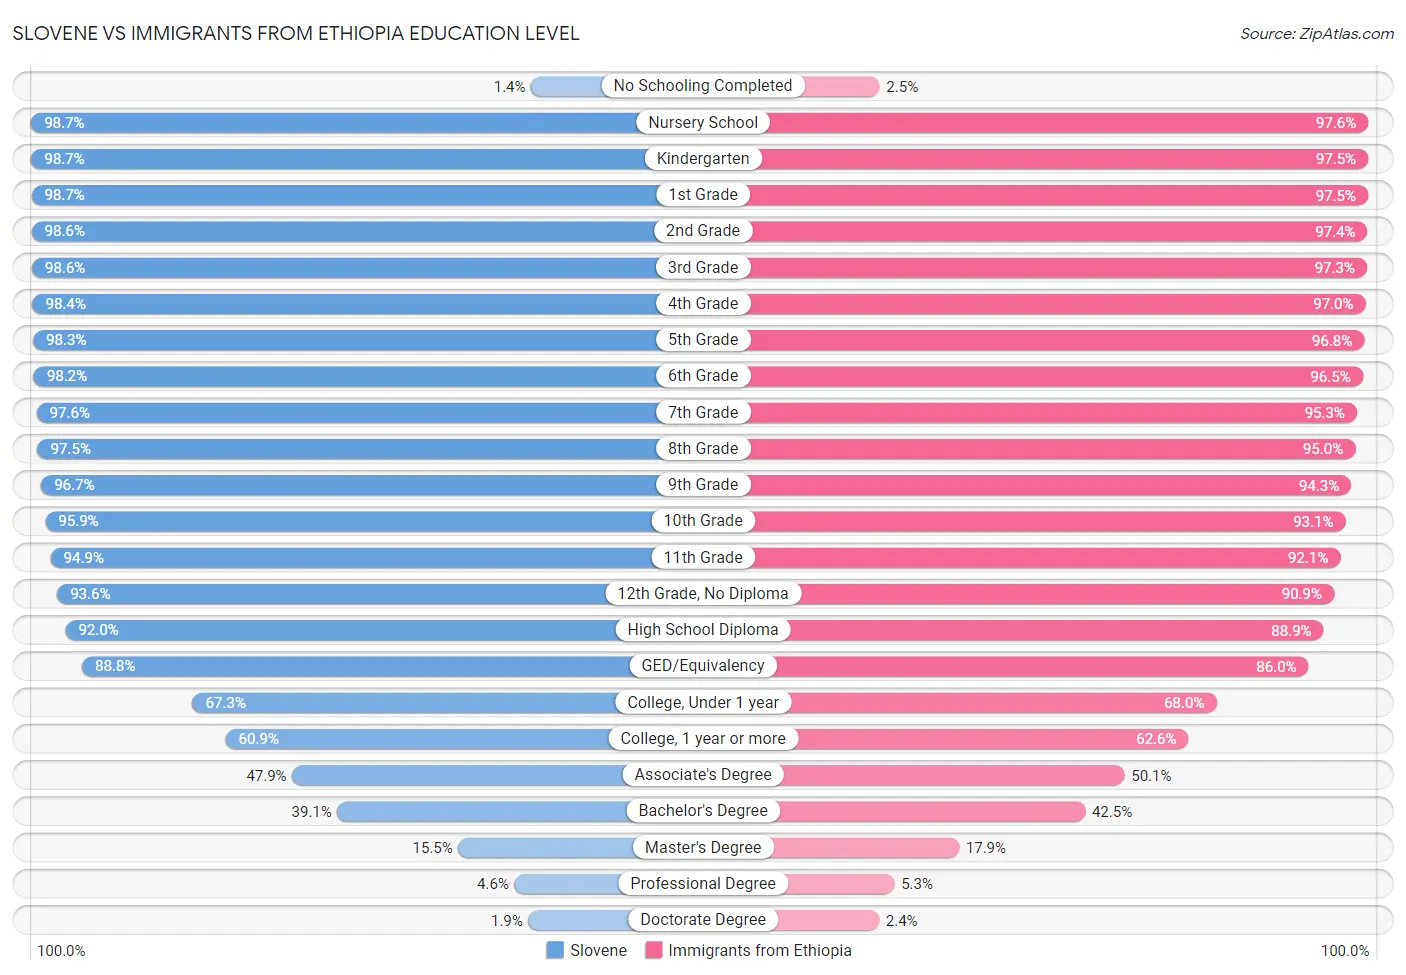 Slovene vs Immigrants from Ethiopia Education Level